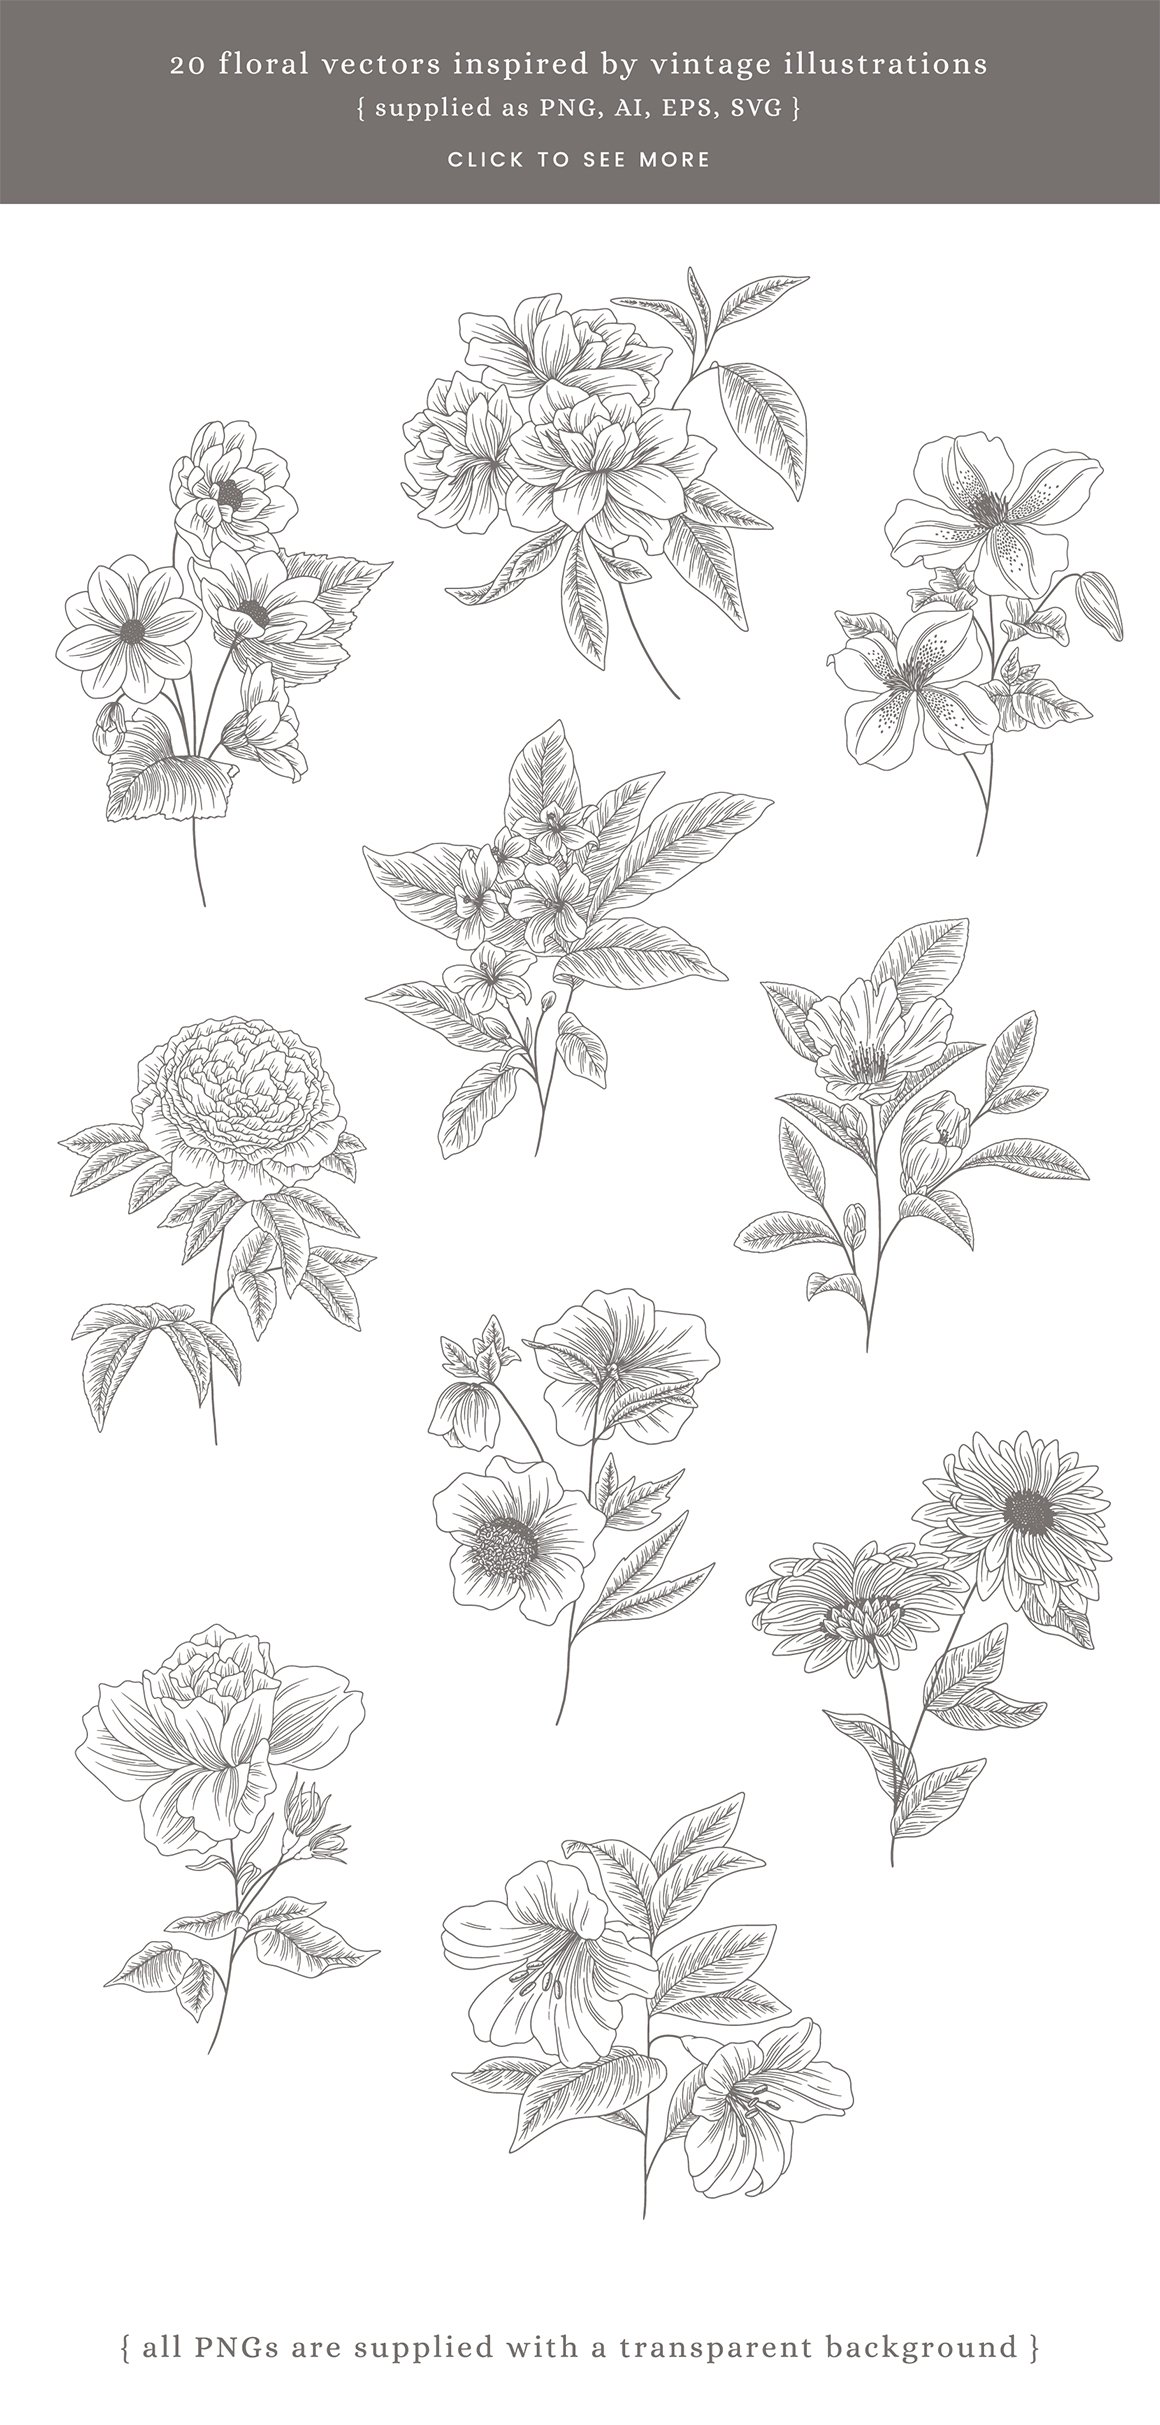 Floral Studies Vector Illustrations II